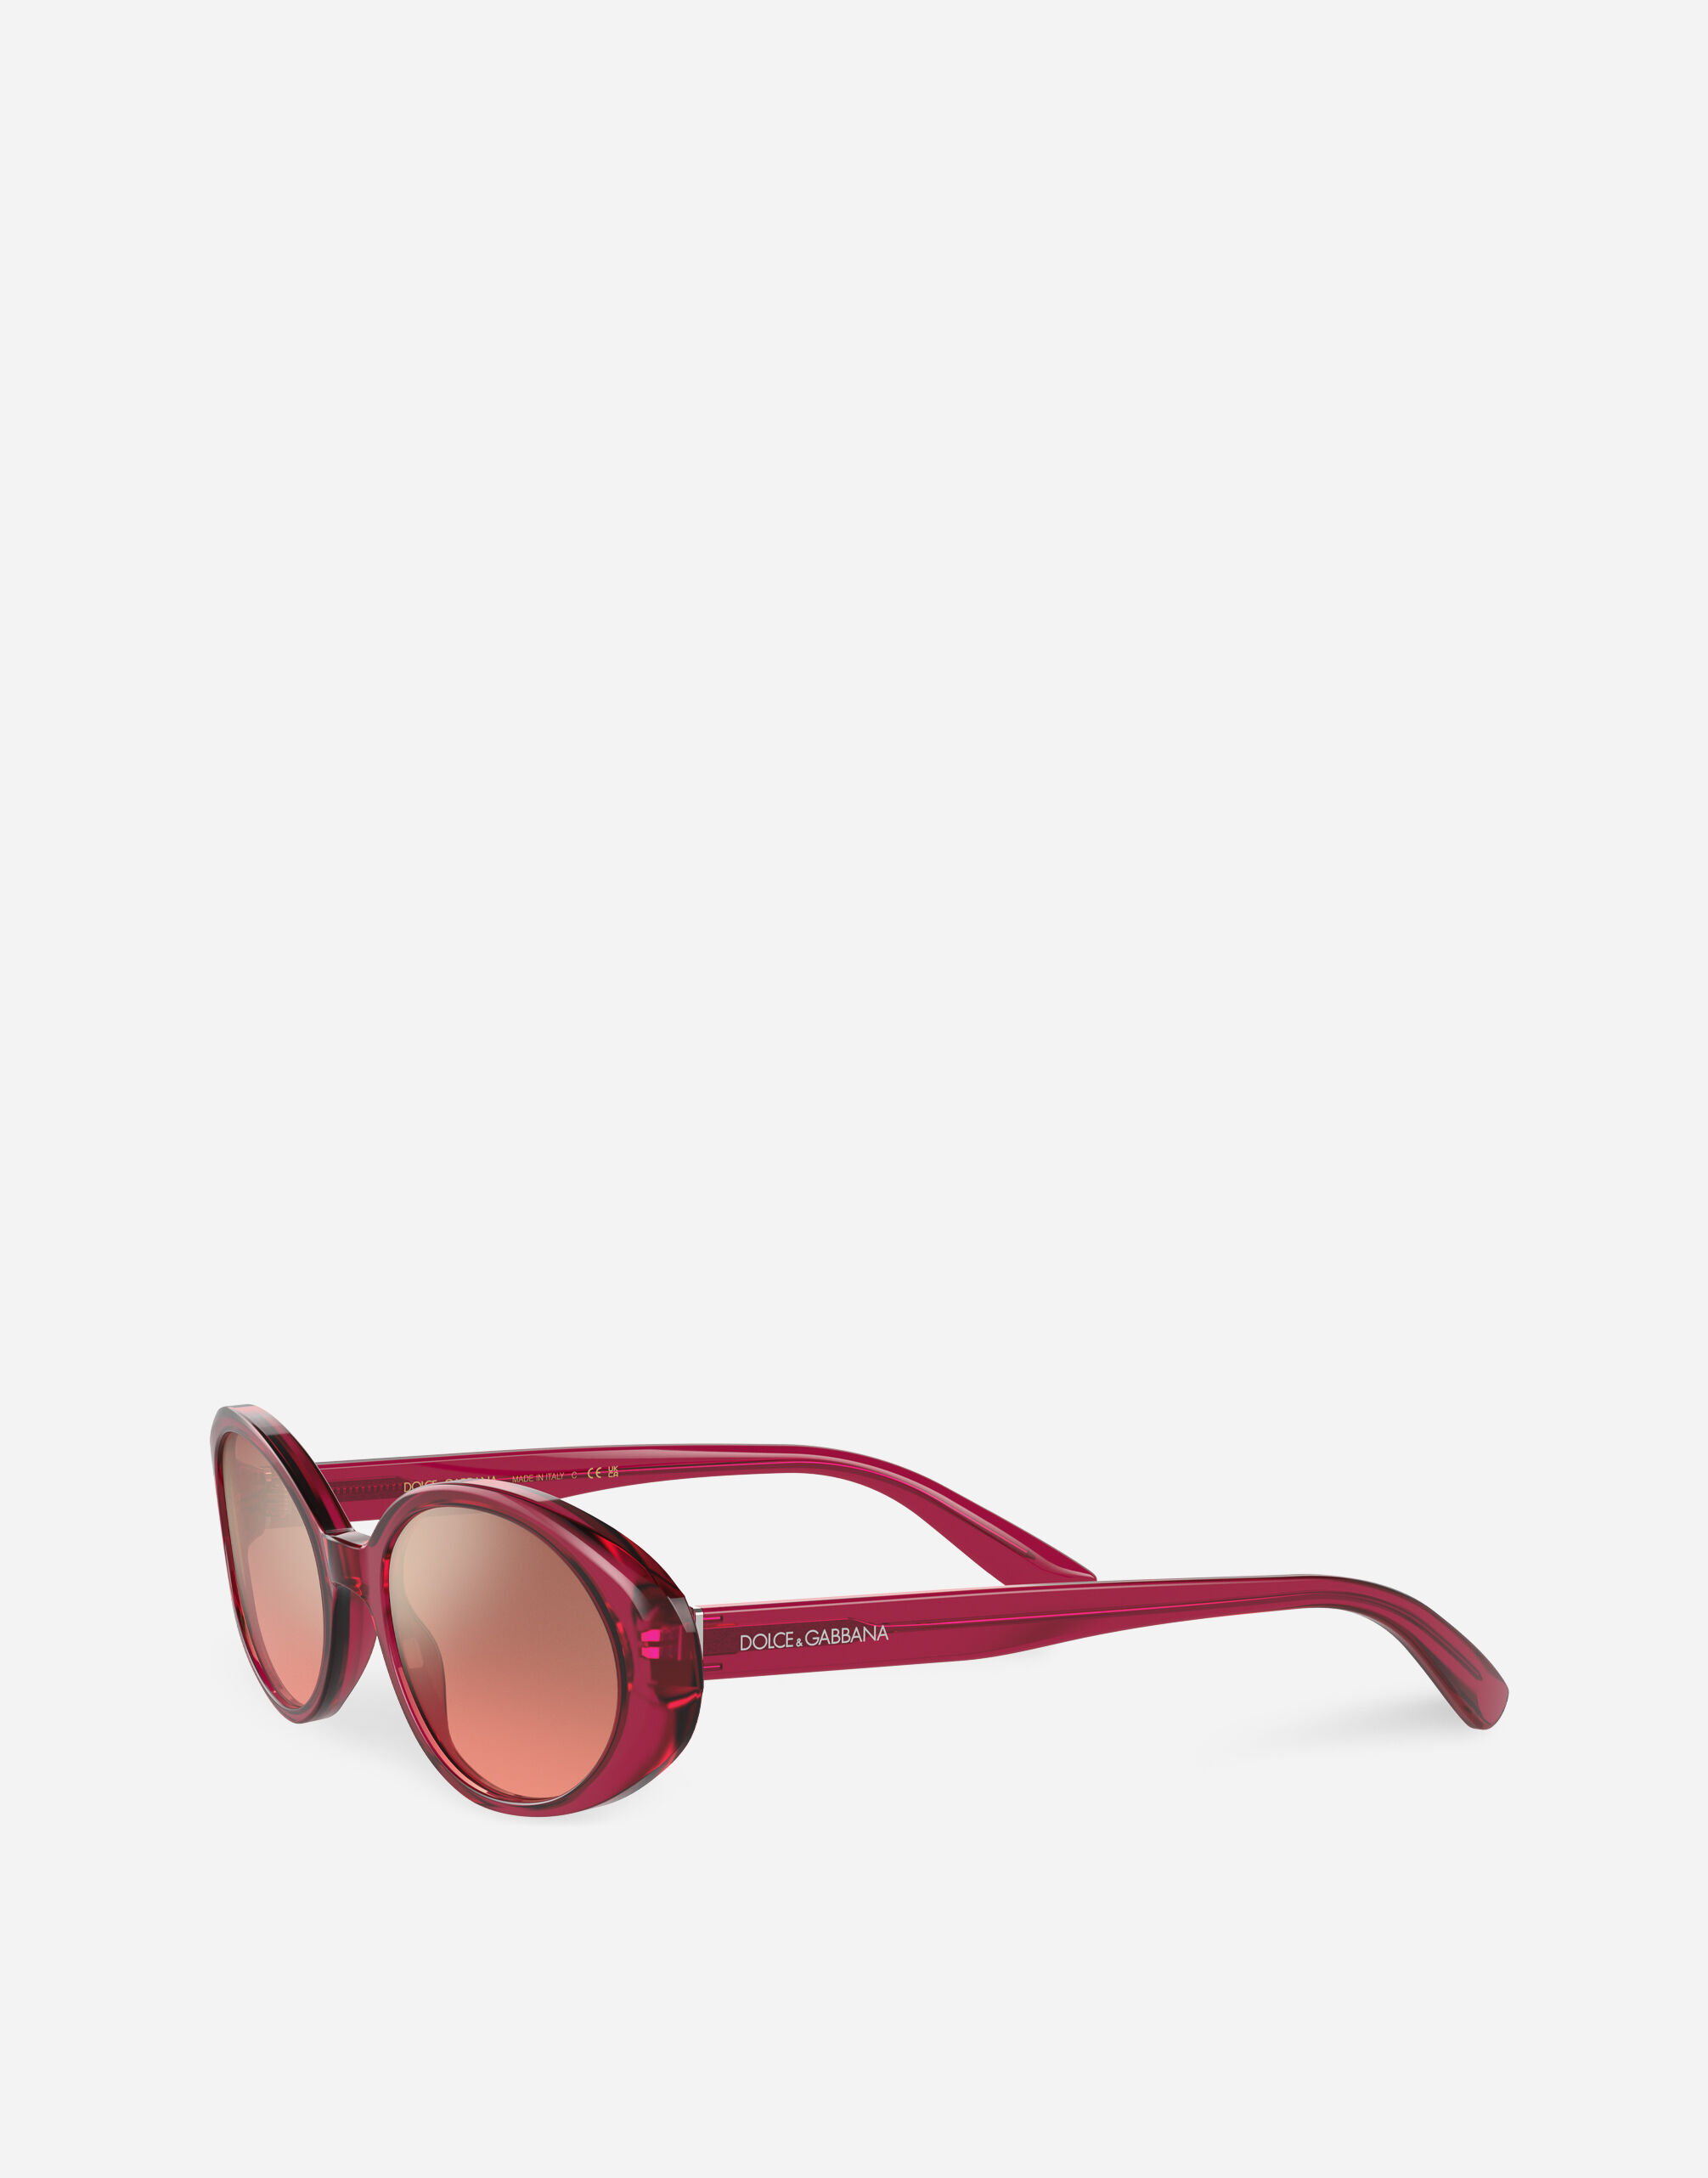 Re-Edition sunglasses in Fucsia opaline for | Dolce&Gabbana® US